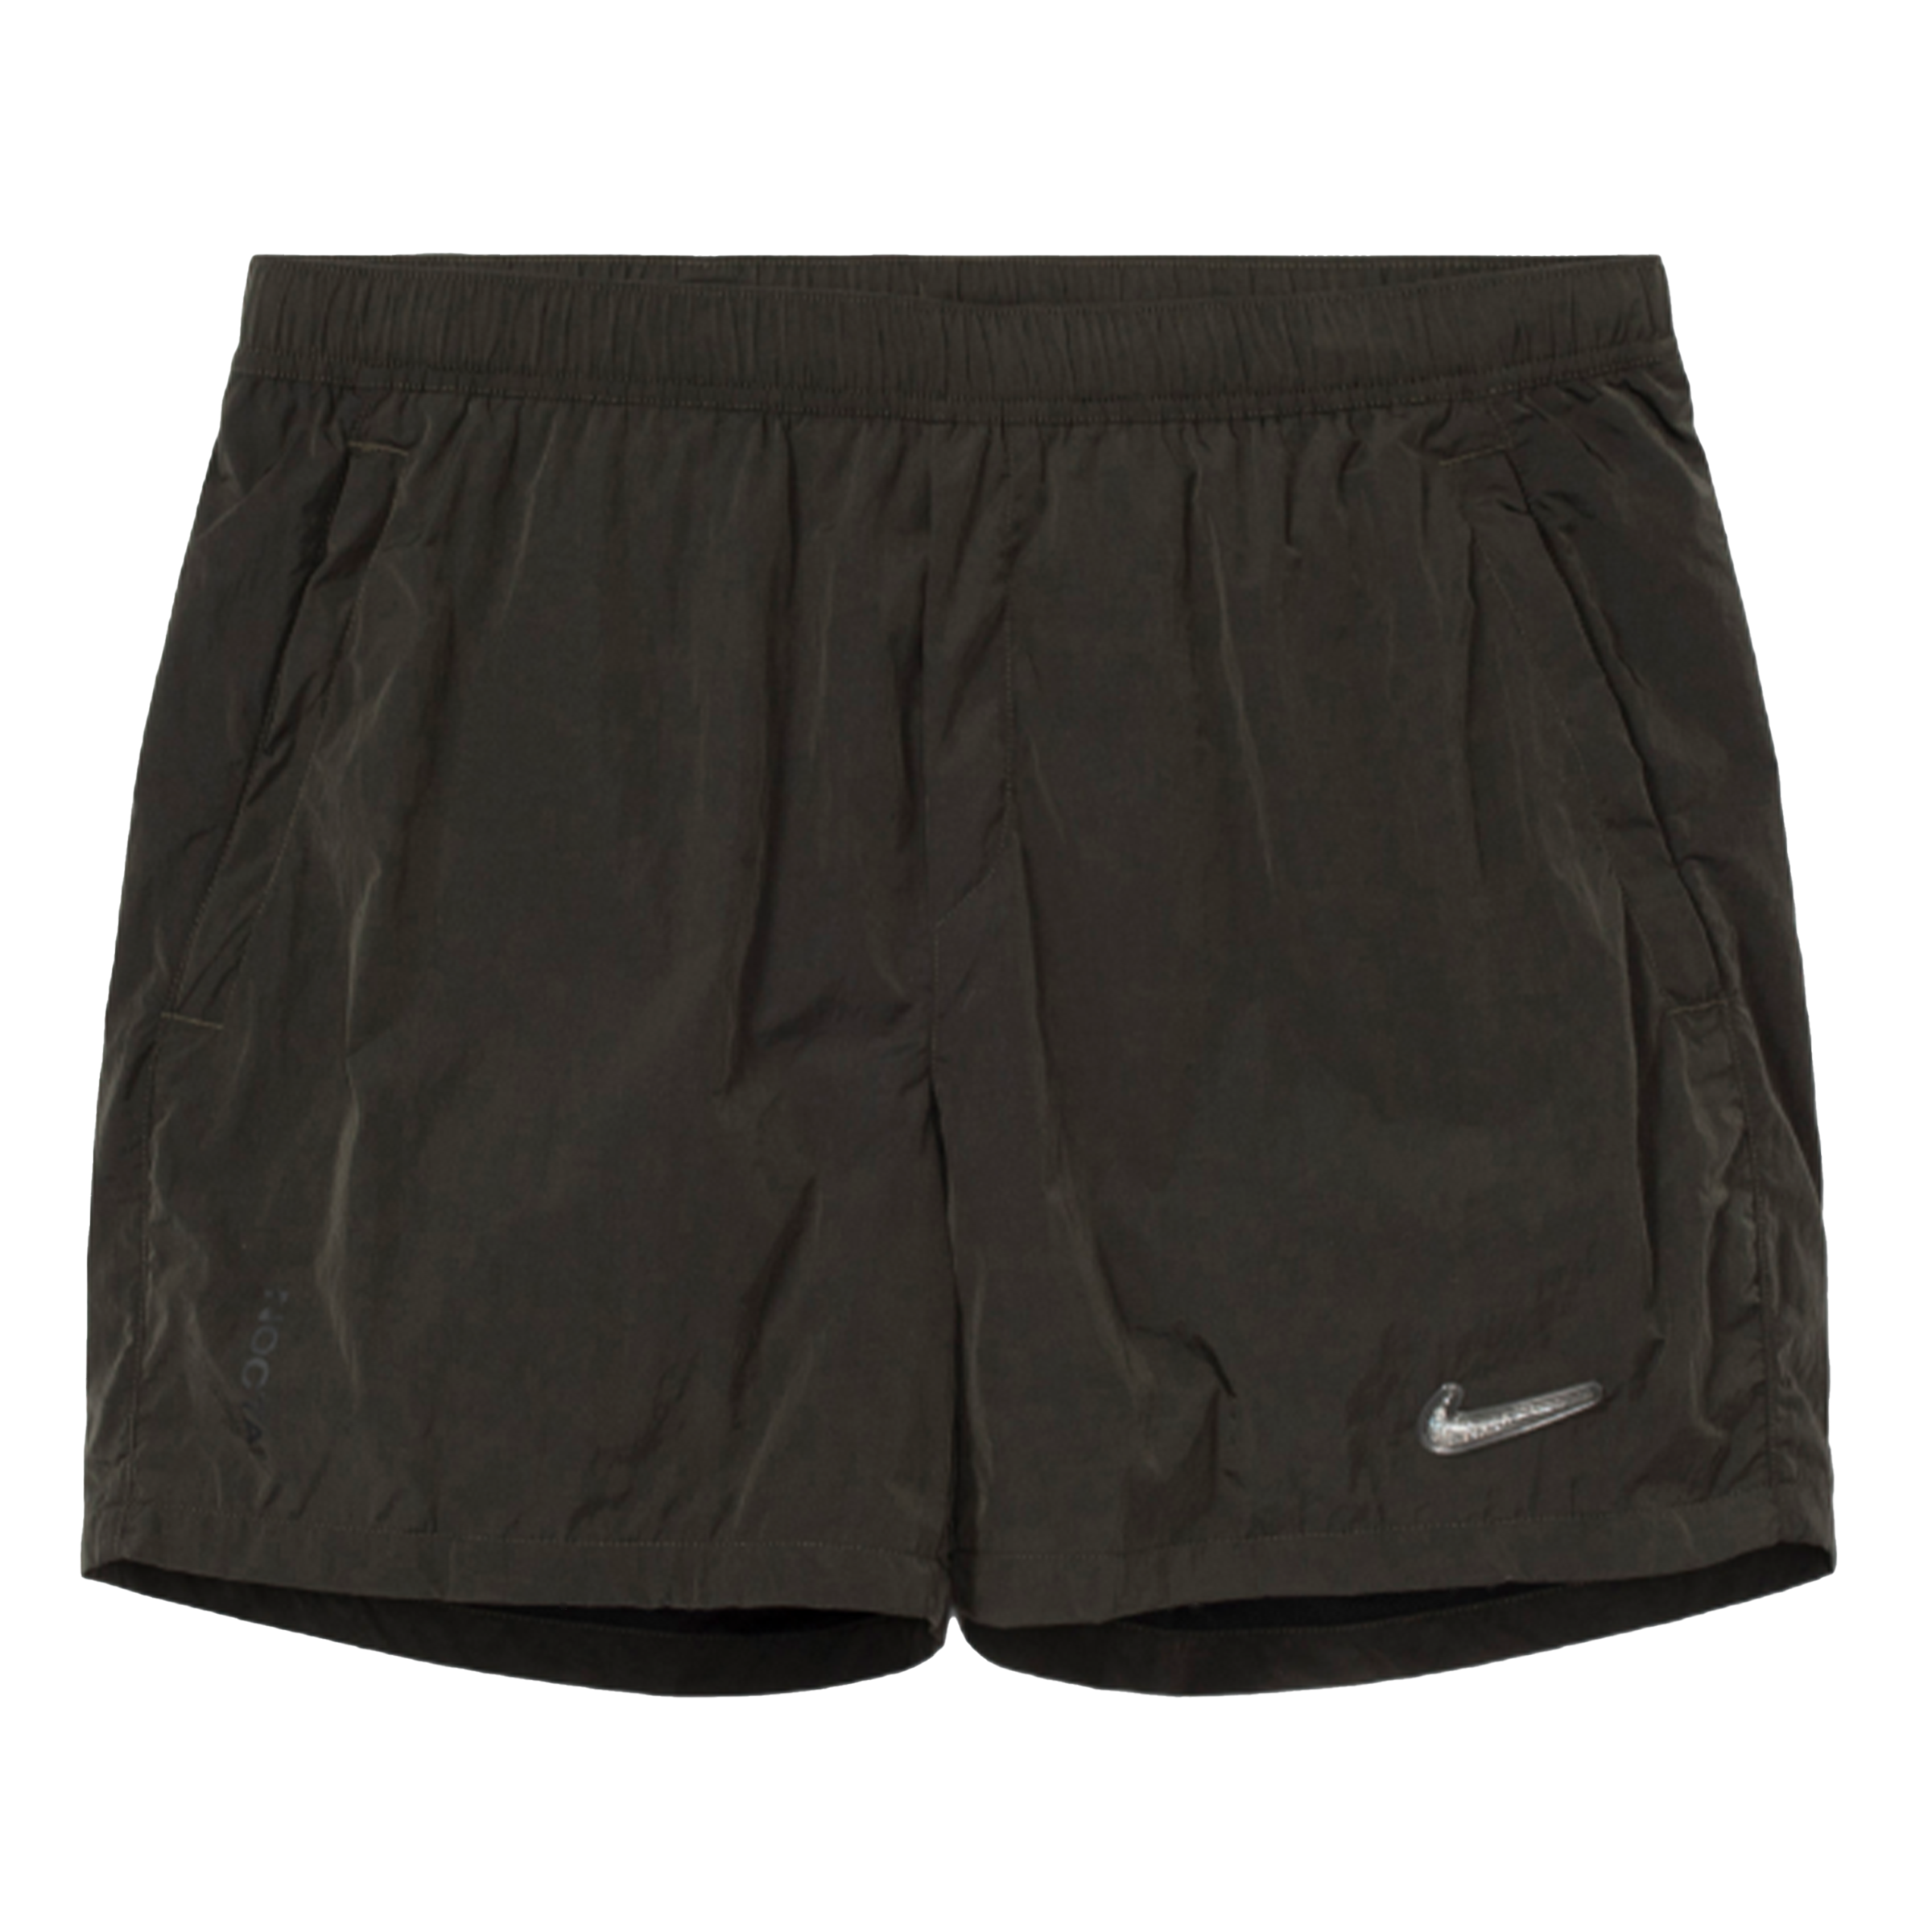 Nike x Nocta x Swarovski "Turks And Caicos" Shorts